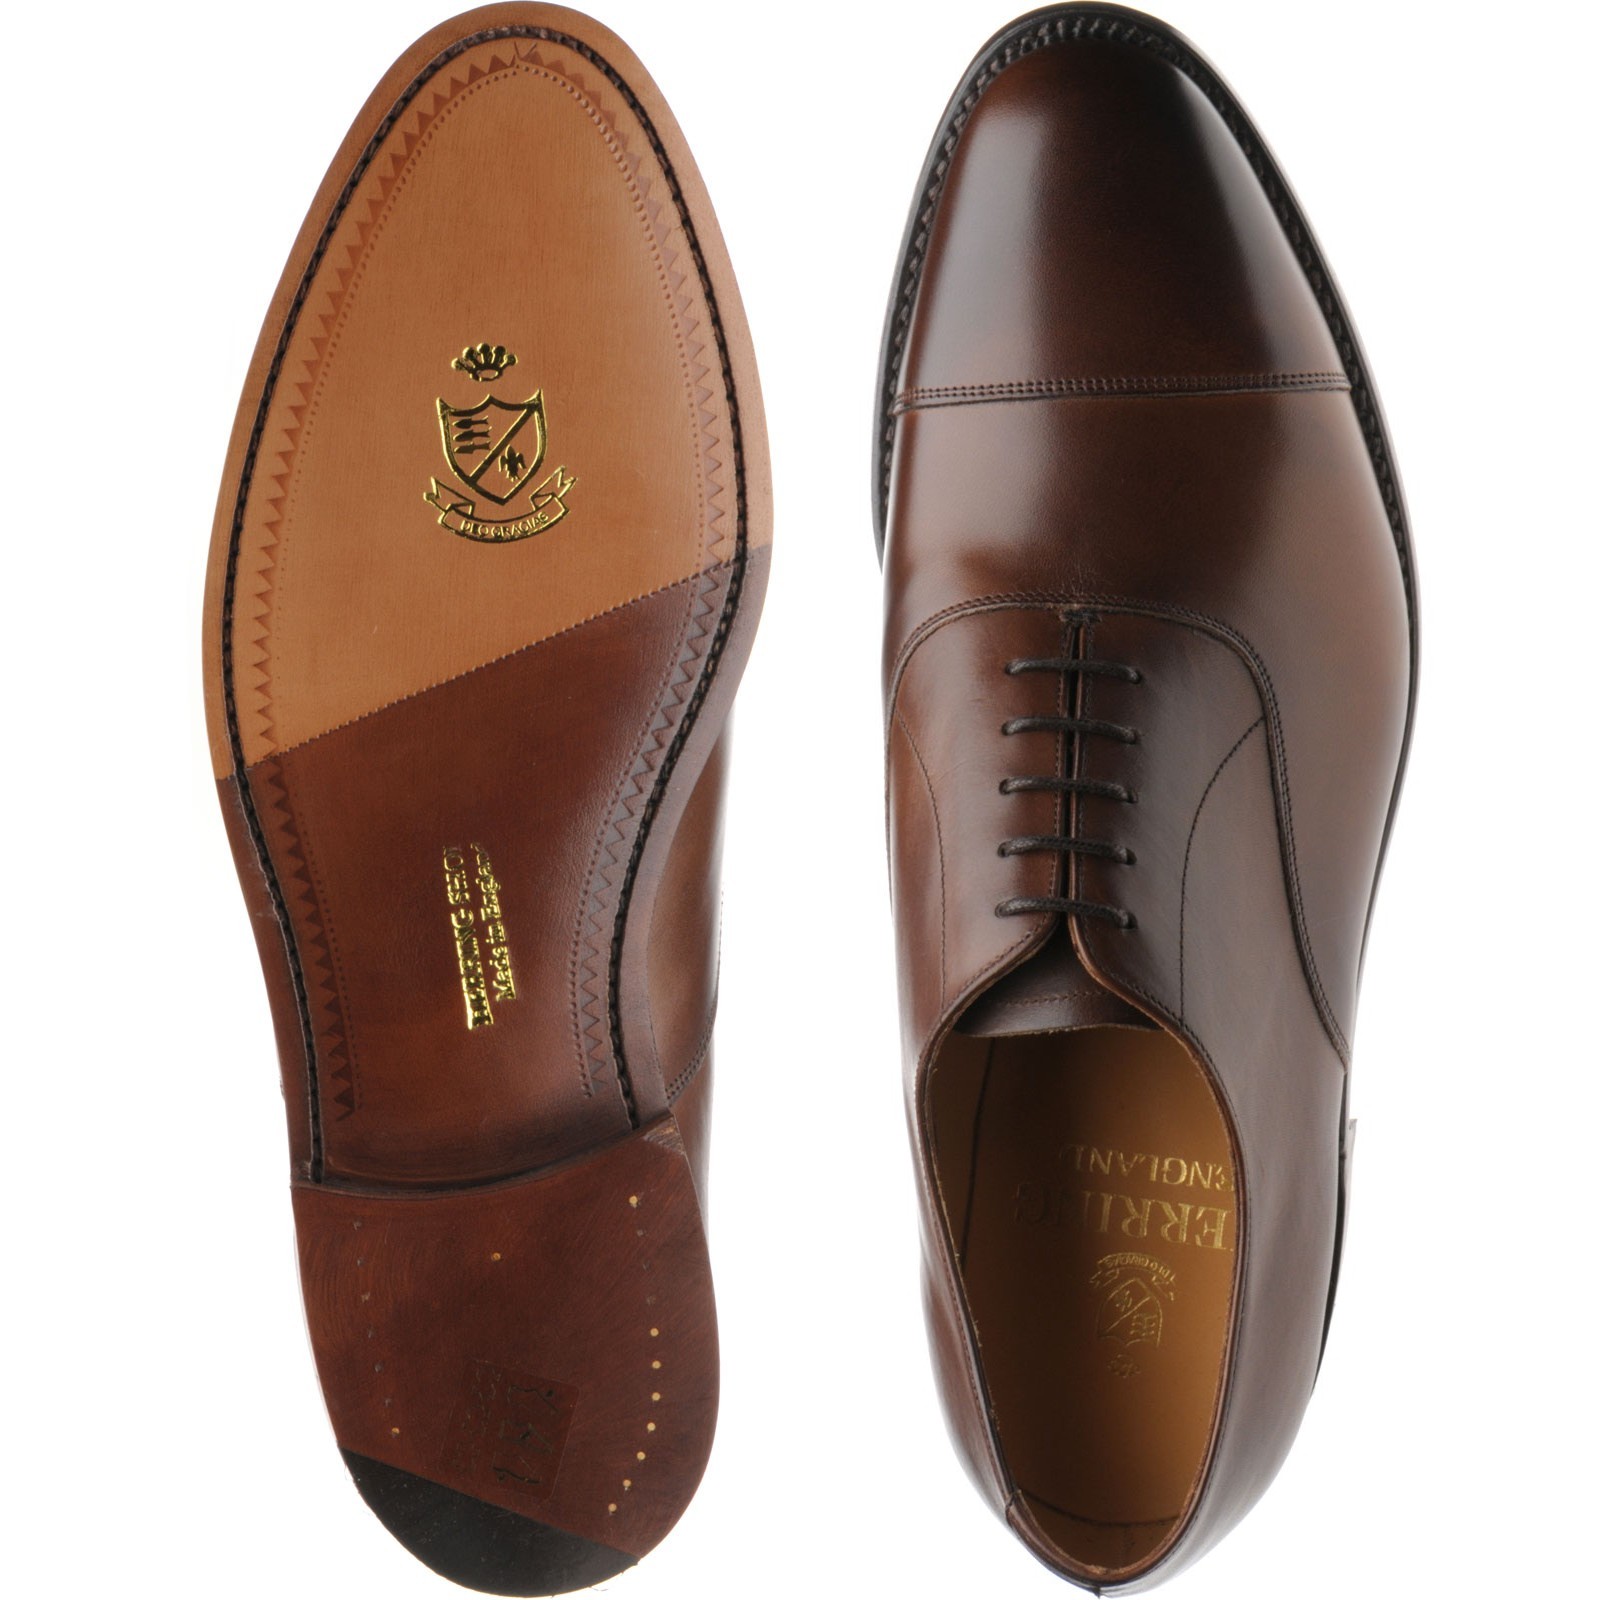 Herring shoes | Herring Classic | Mayfair Oxfords in Mahogany Calf at ...